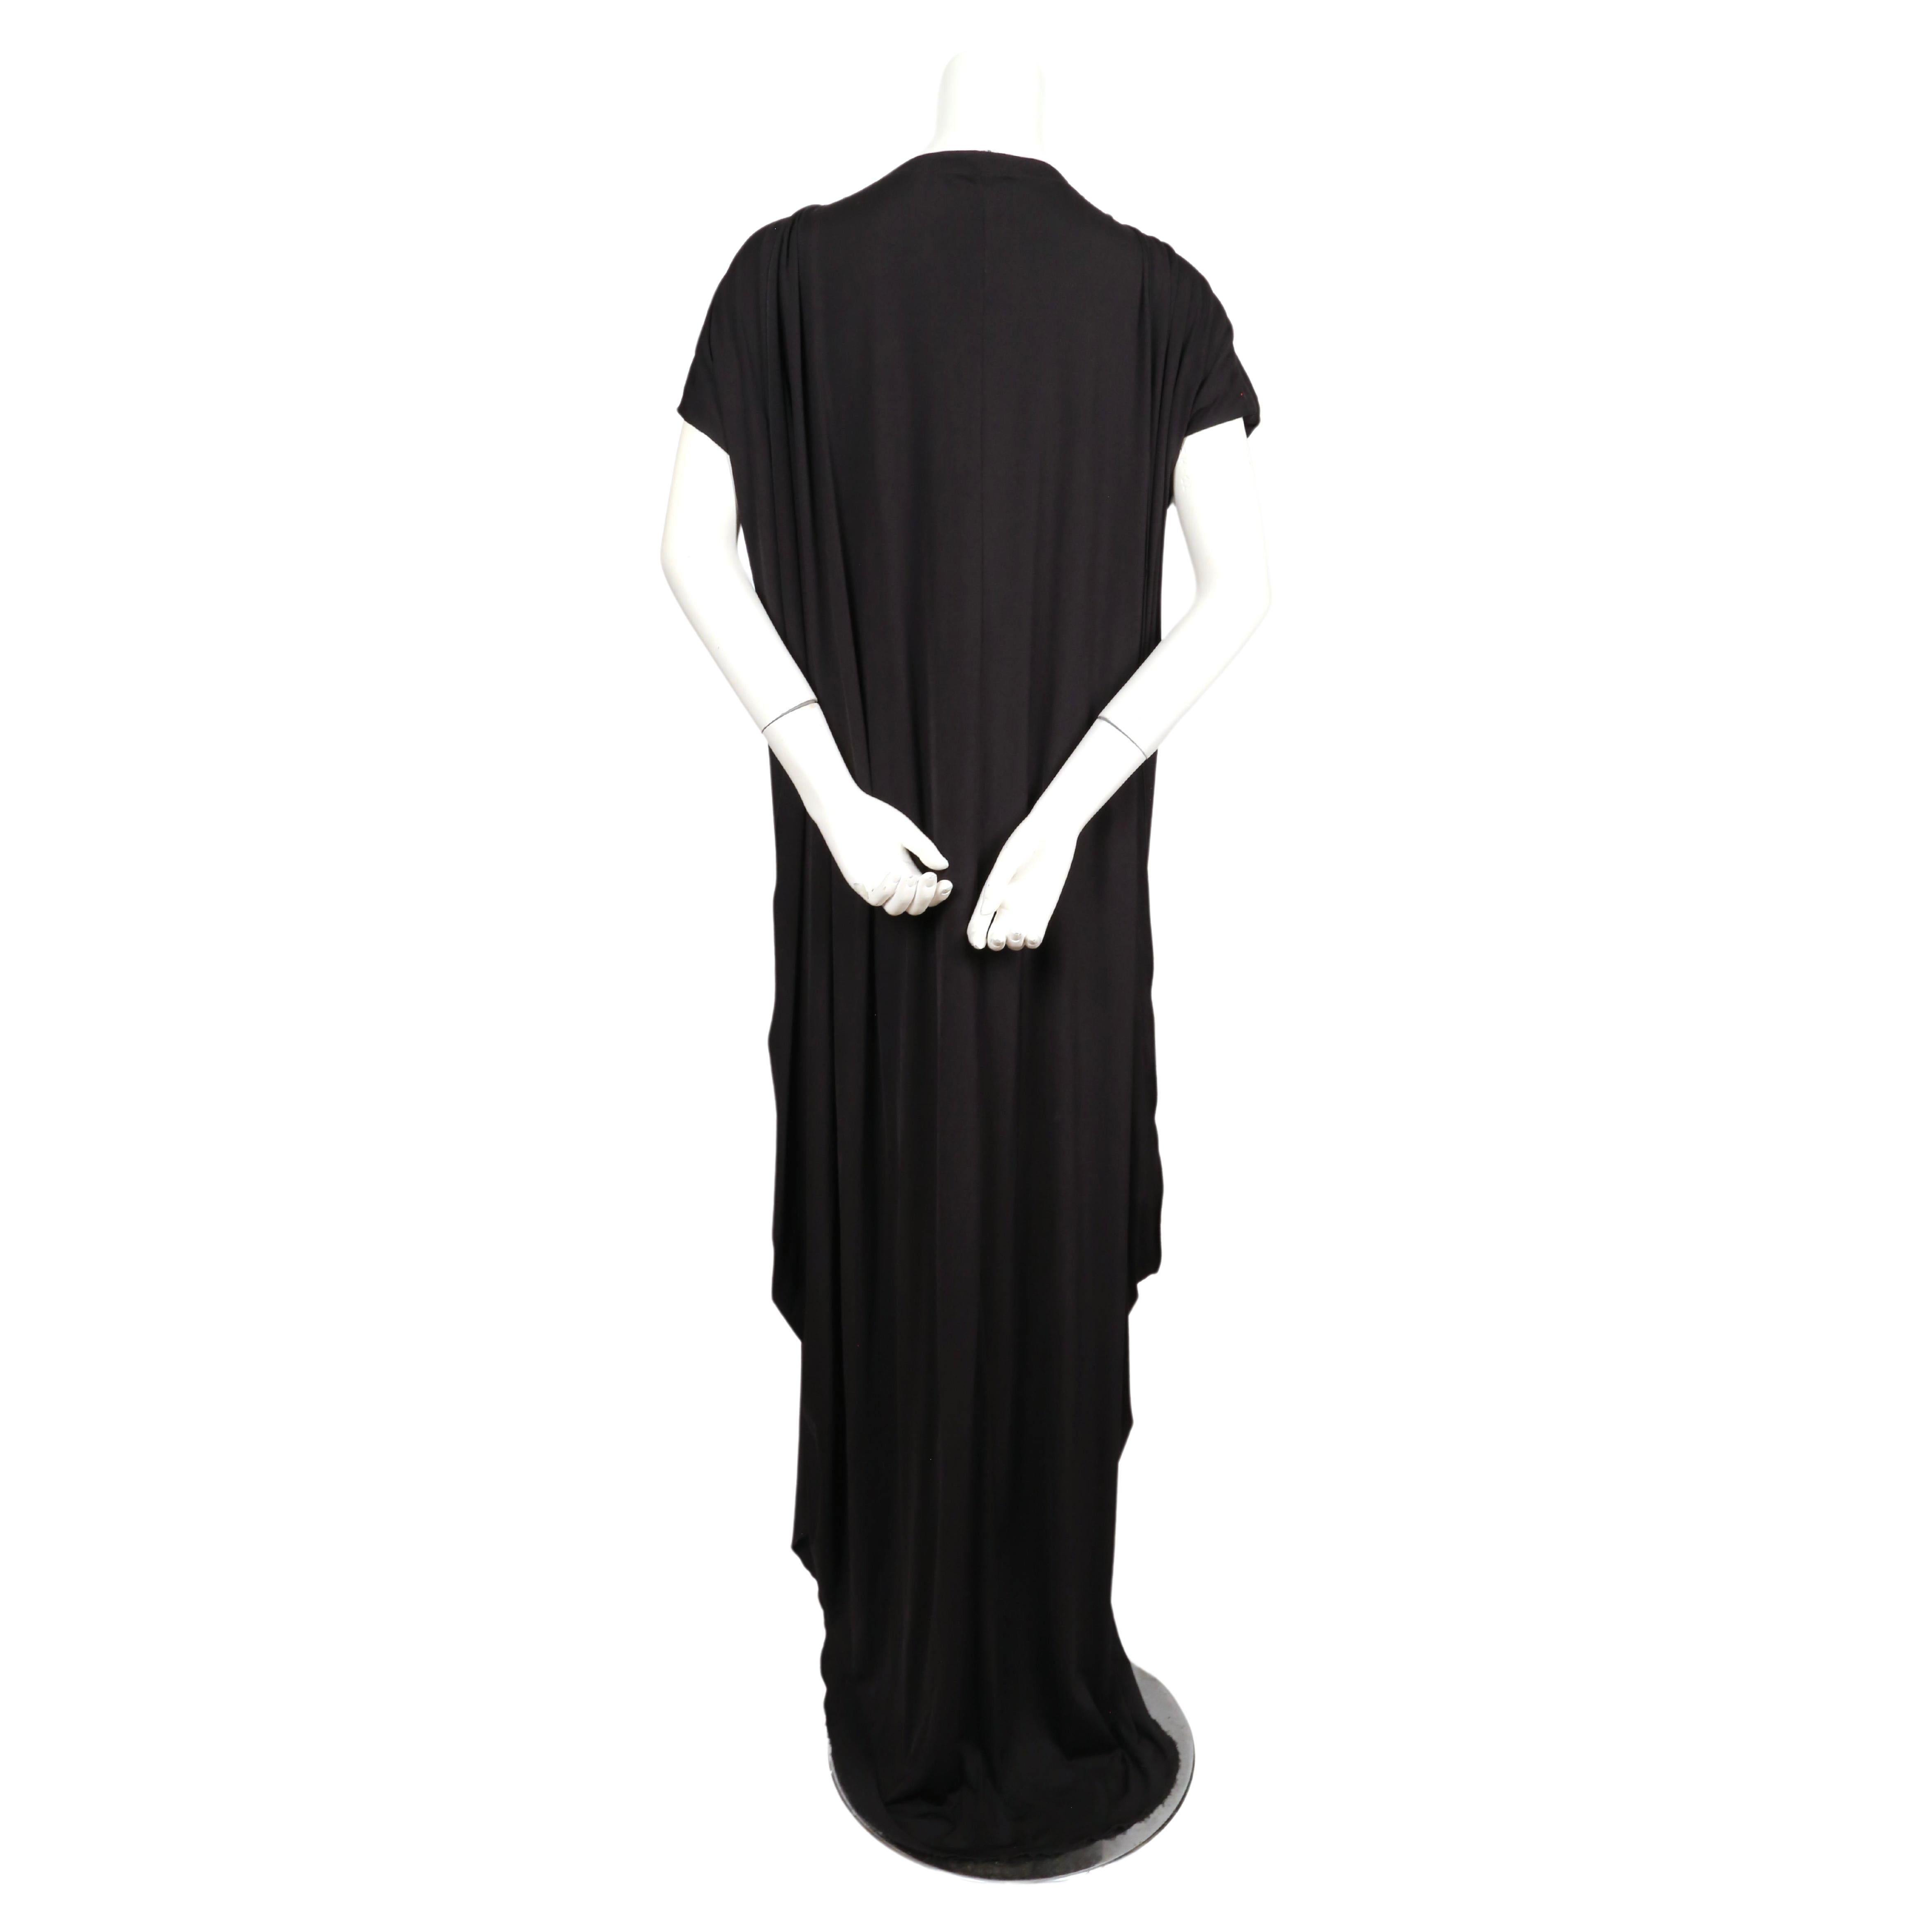 YVES SAINT LAURENT by Stefano Pilati black draped caftan dress For Sale 2